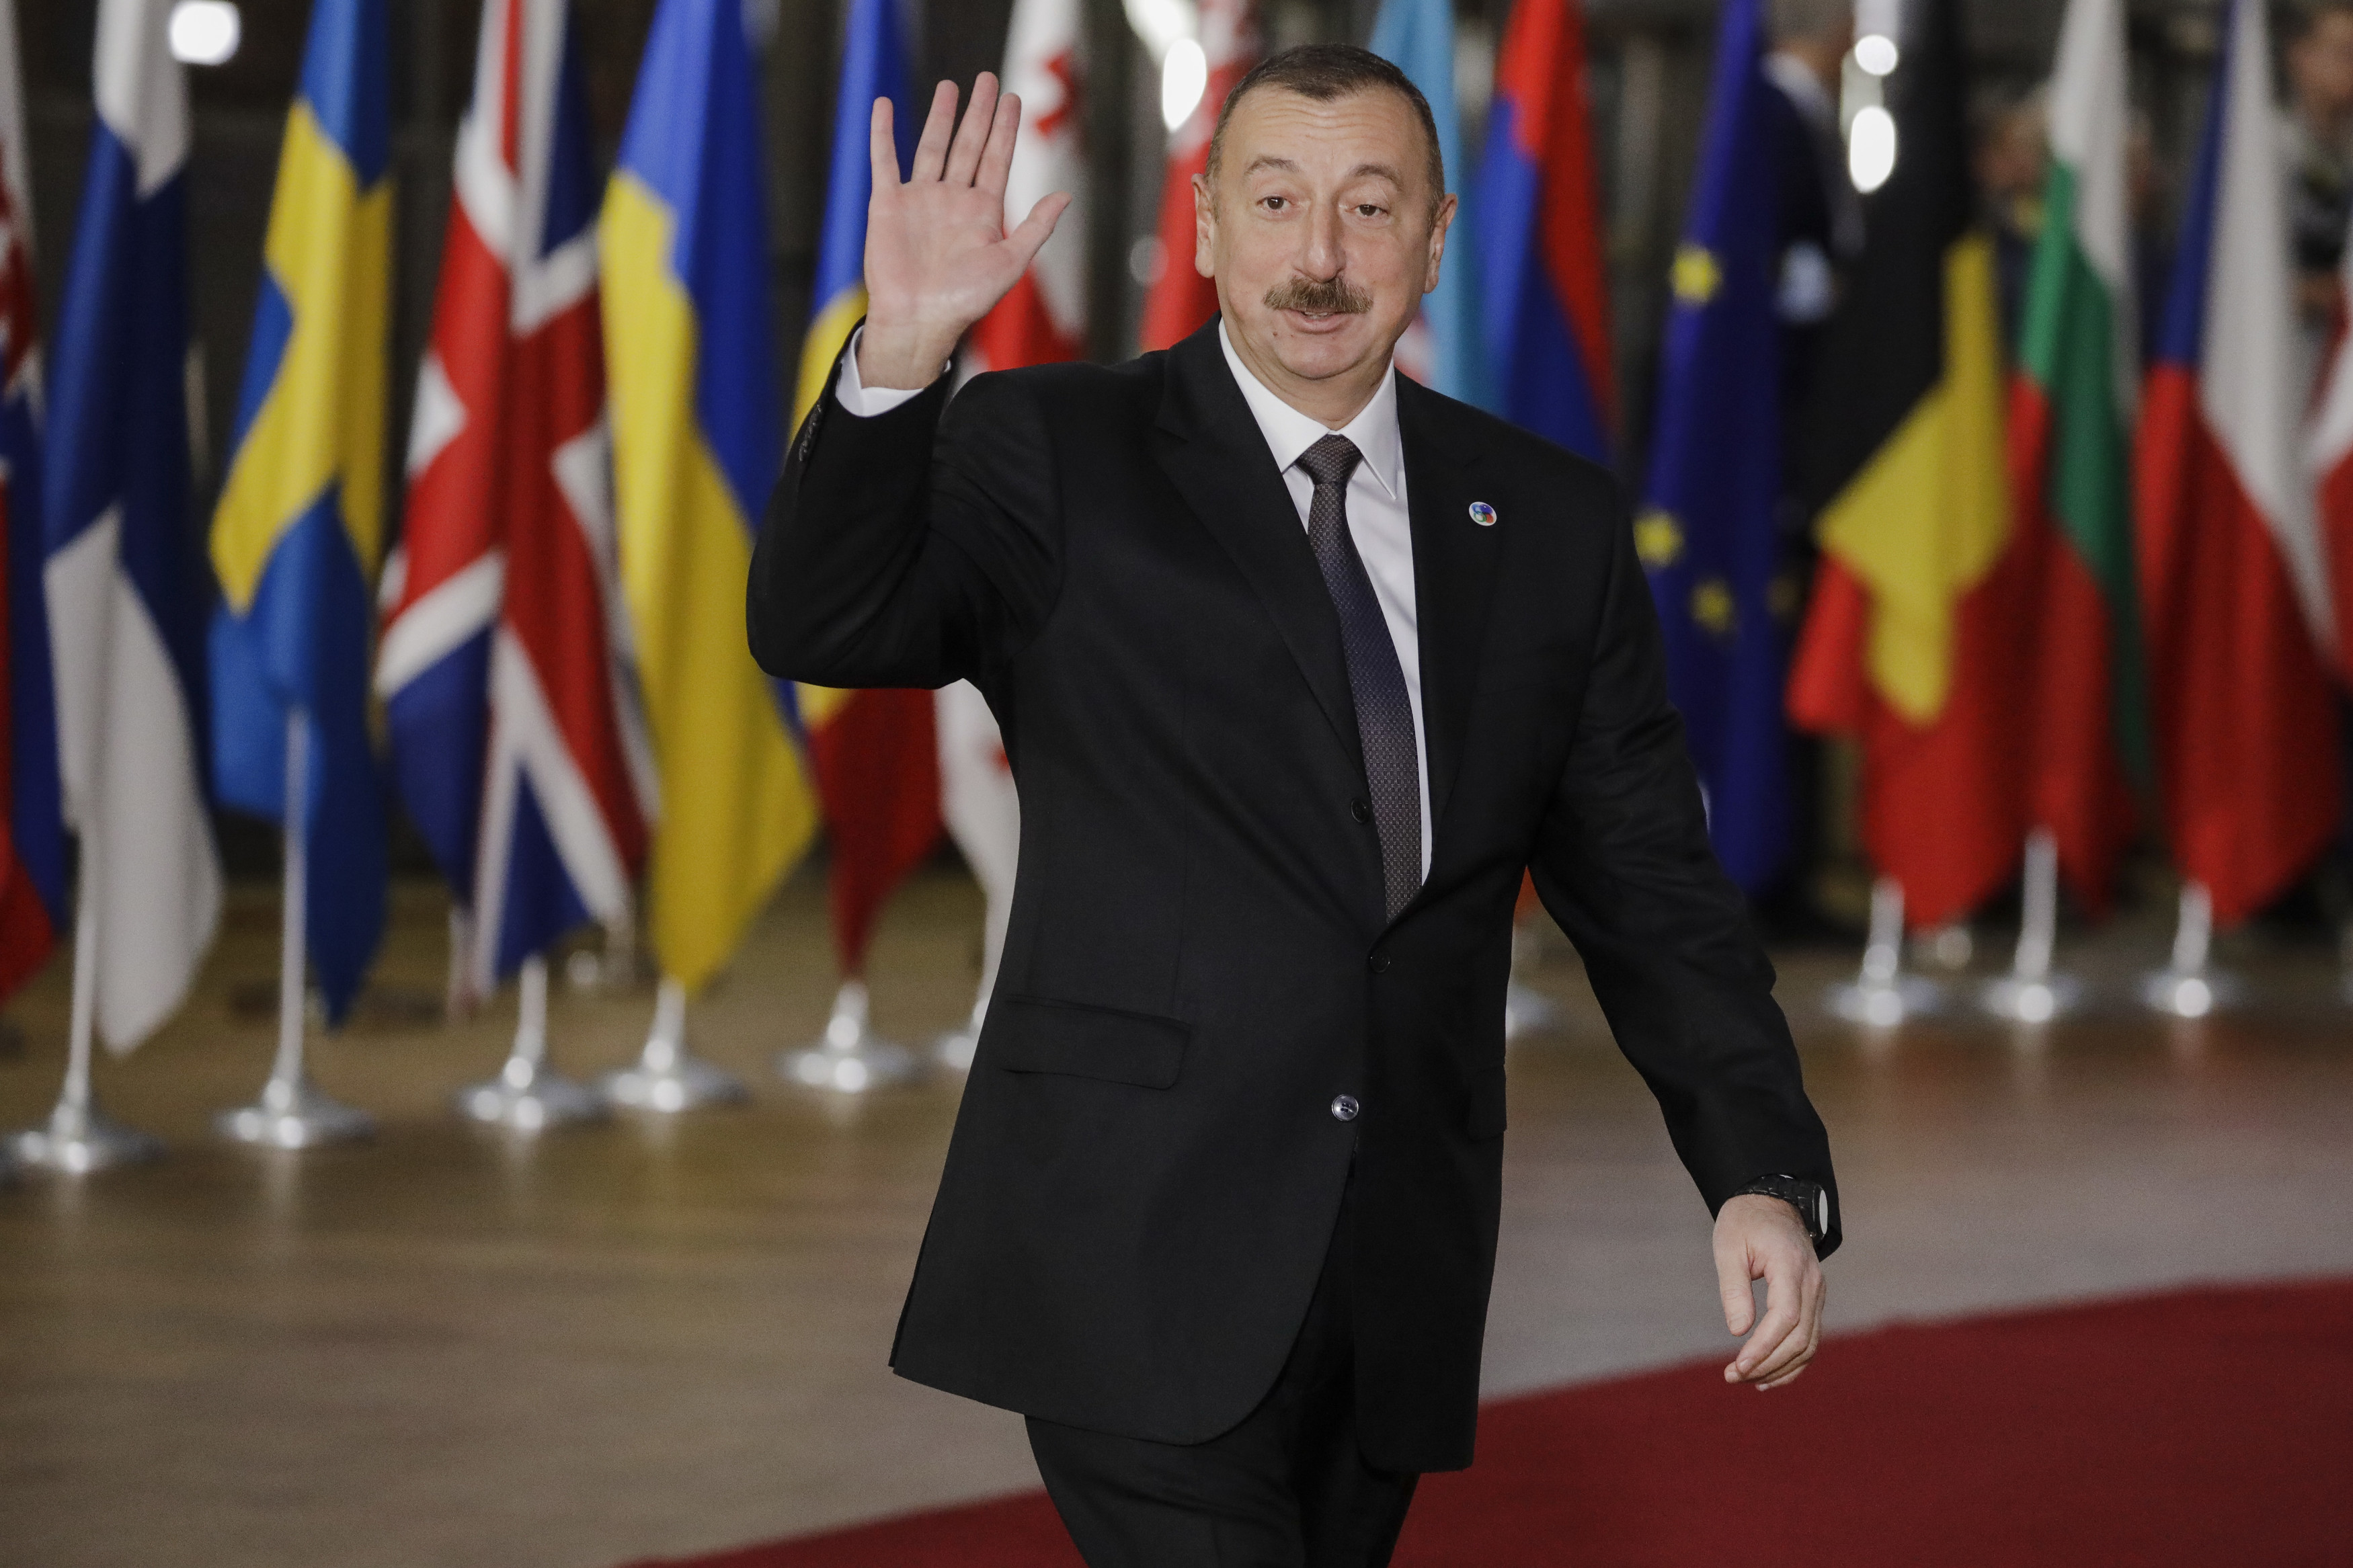 NAM Chairman President Aliyev Praises UN For COVID-19 Response